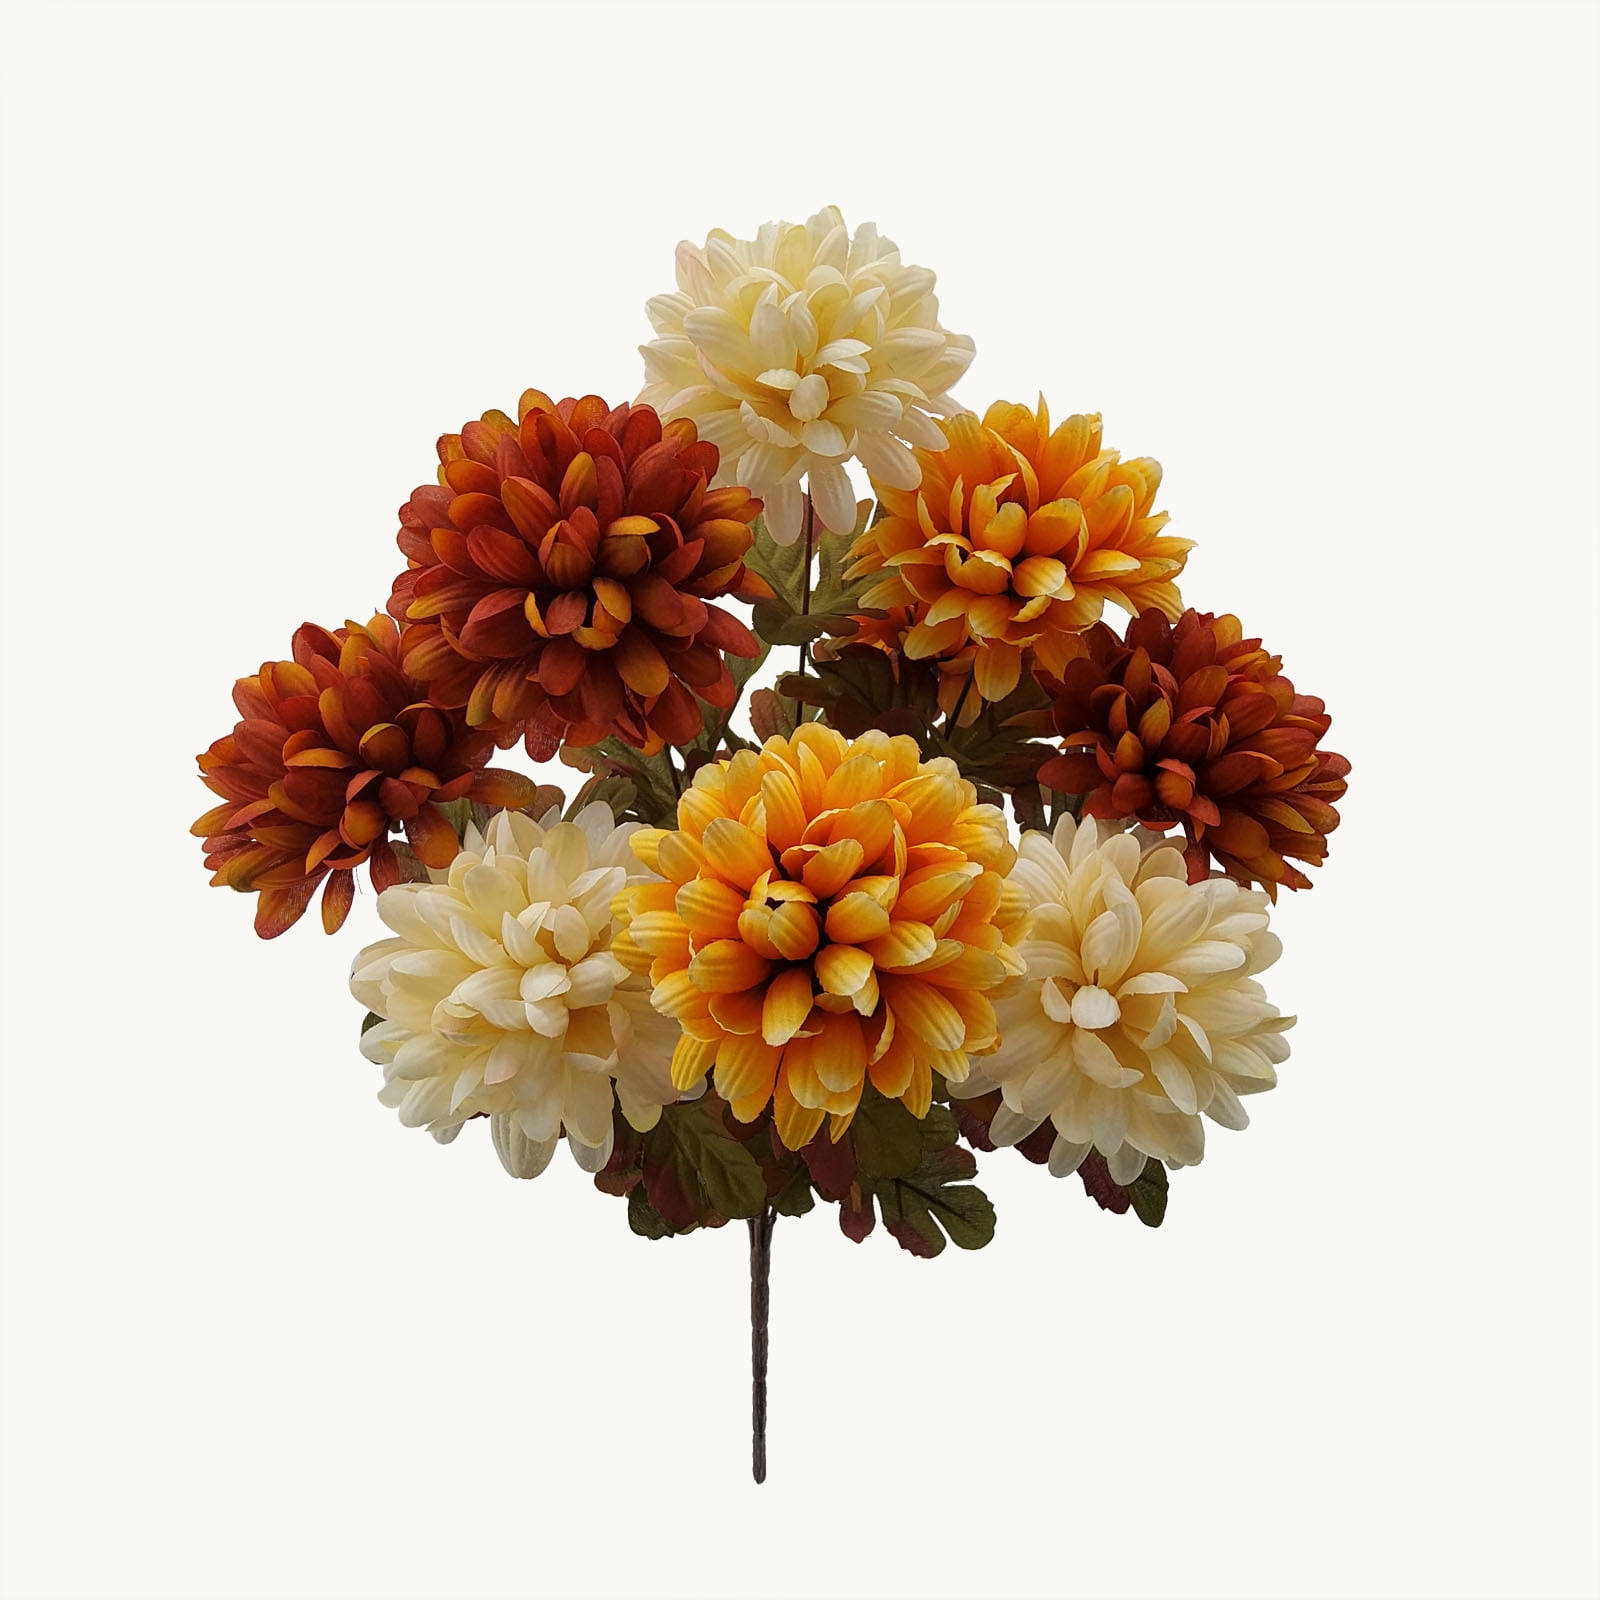 Mainstays 20" Artificial Flower Cream and Orange Mum Bush